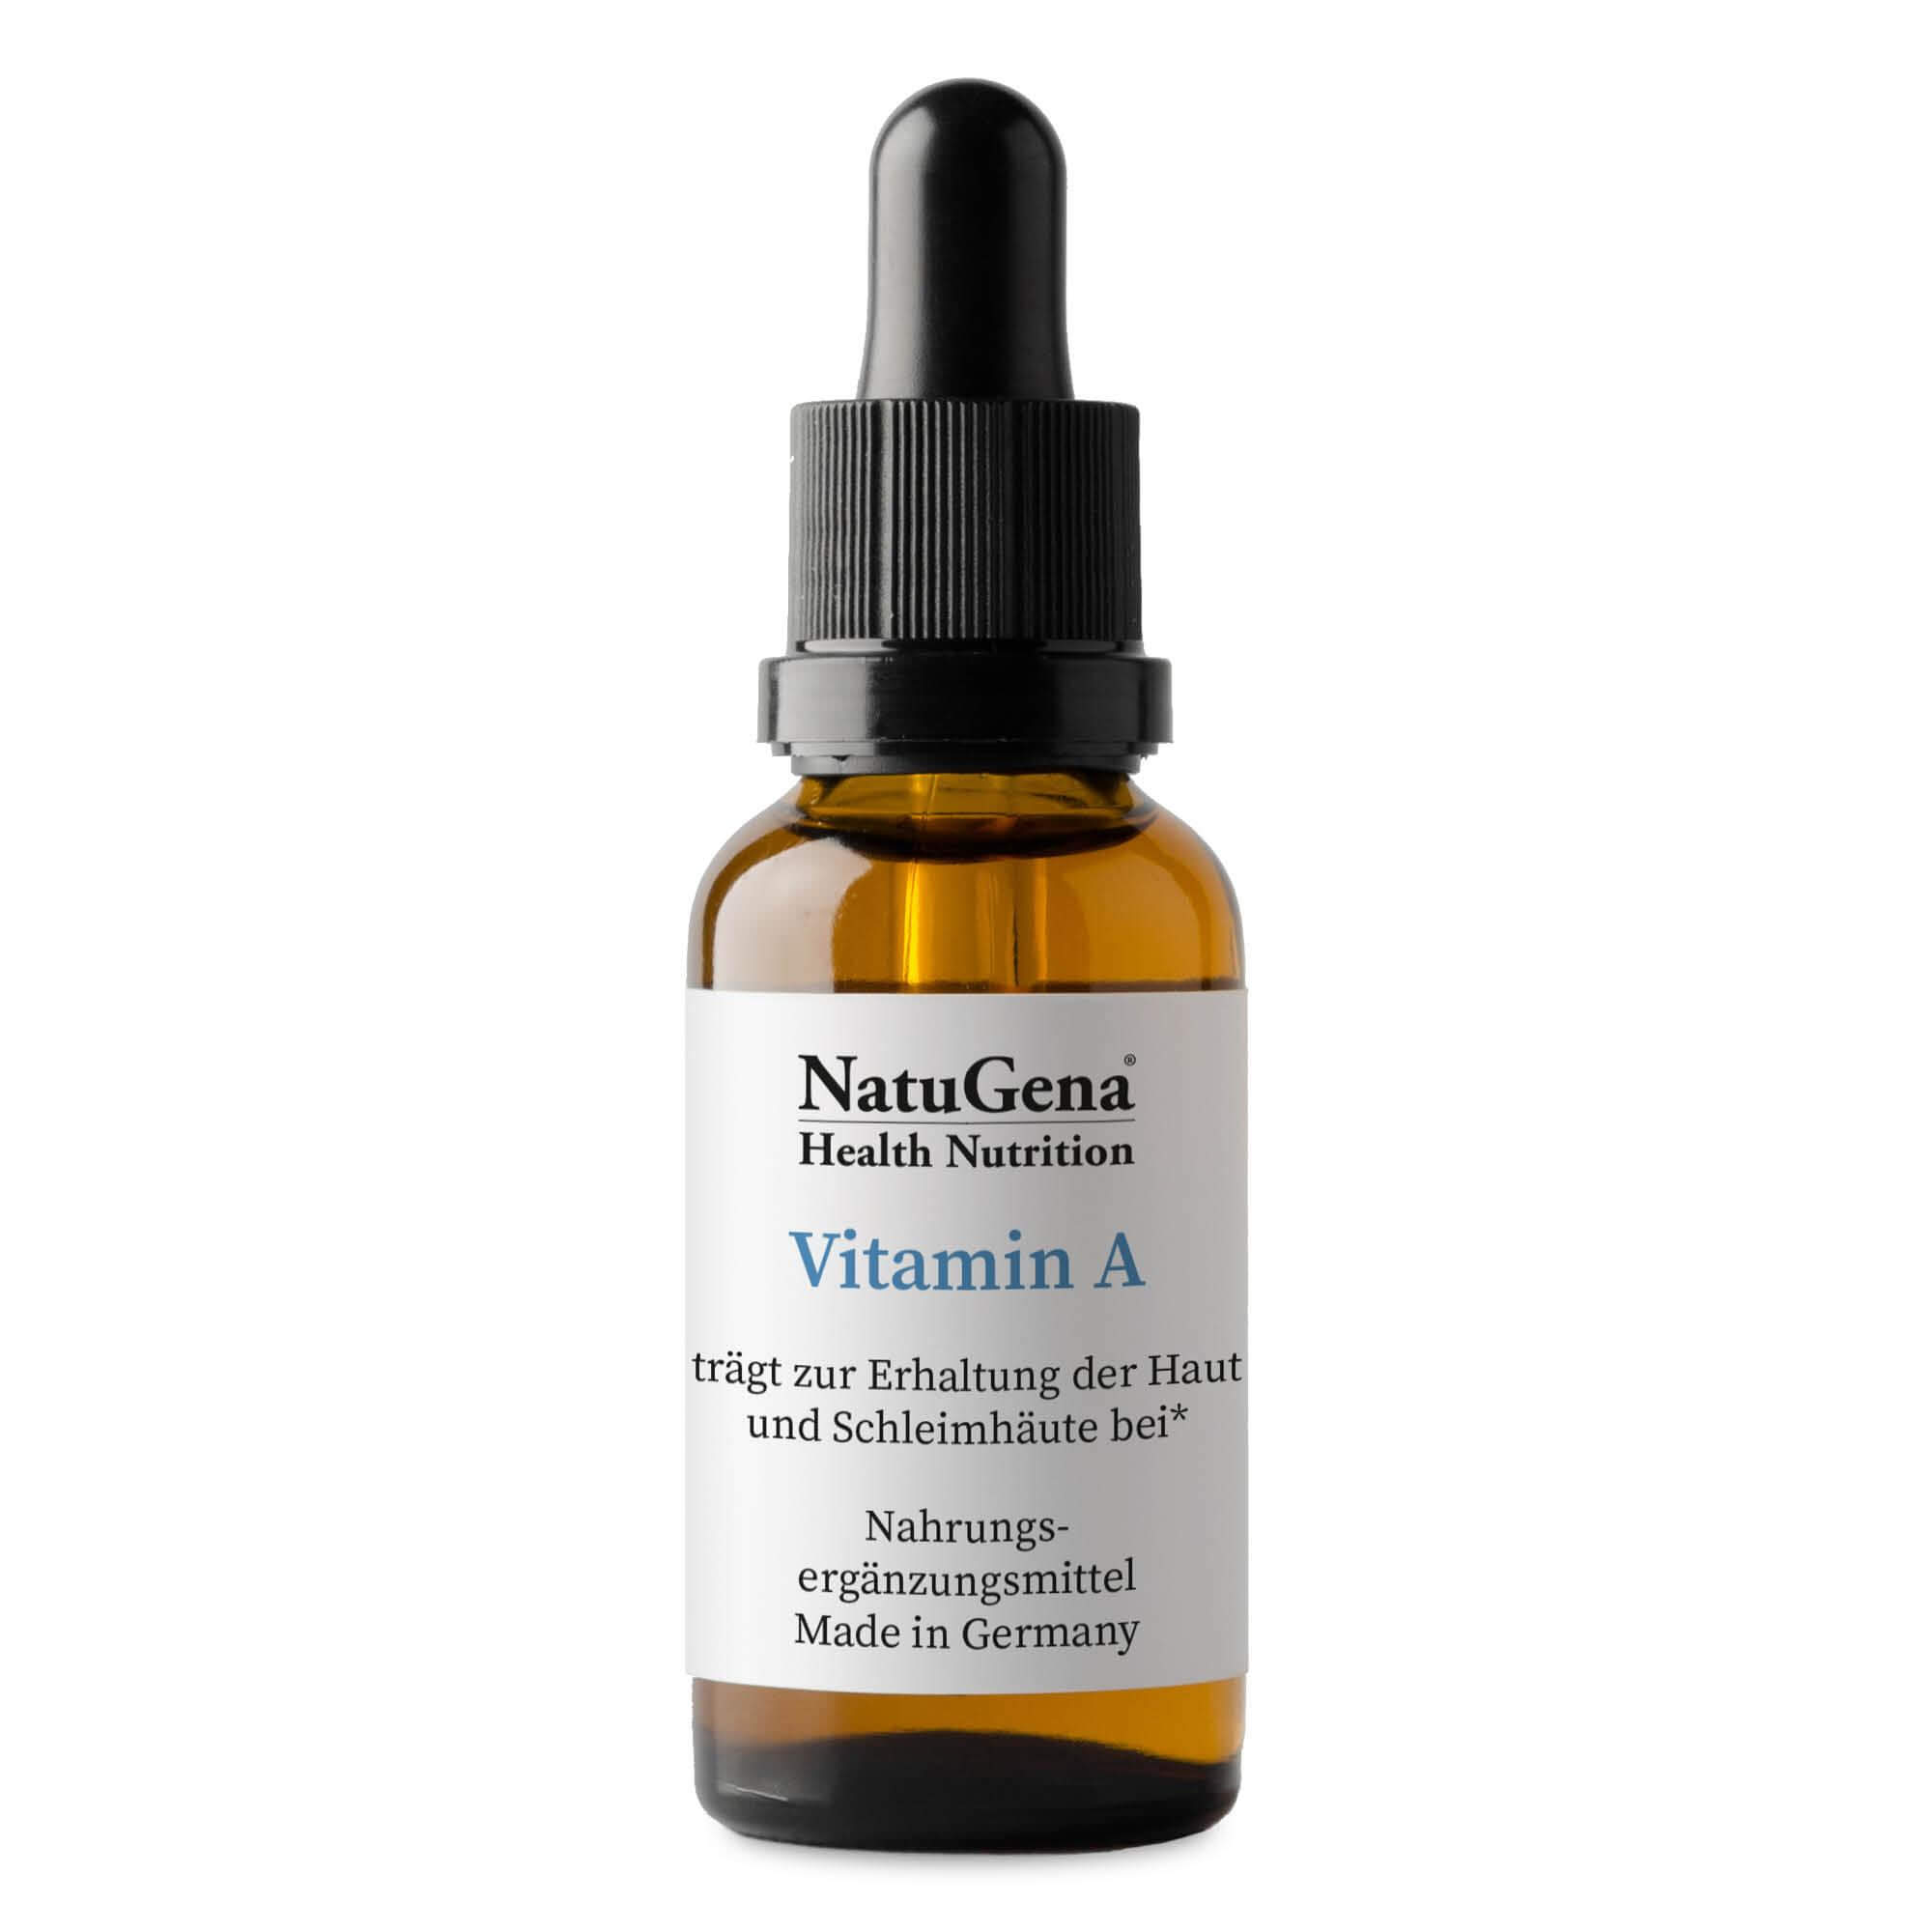 NatuGena Vitamin A | 15 ml | 5-Monats-Packung | Retinol-Palmitat-Öl